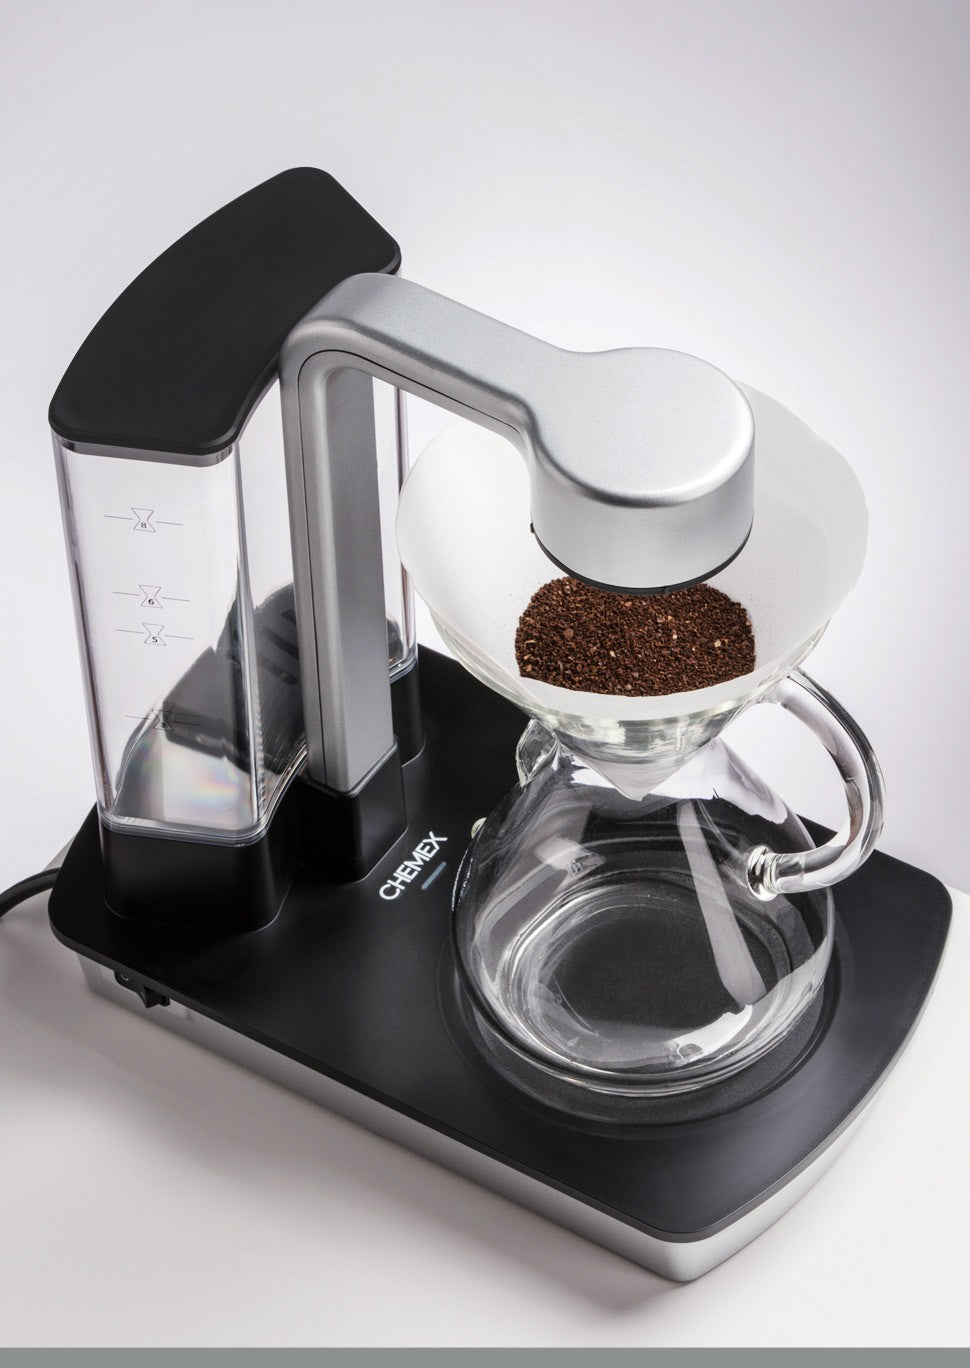  Chemex Ottomatic Coffeemaker Set - 40 oz. Capacity